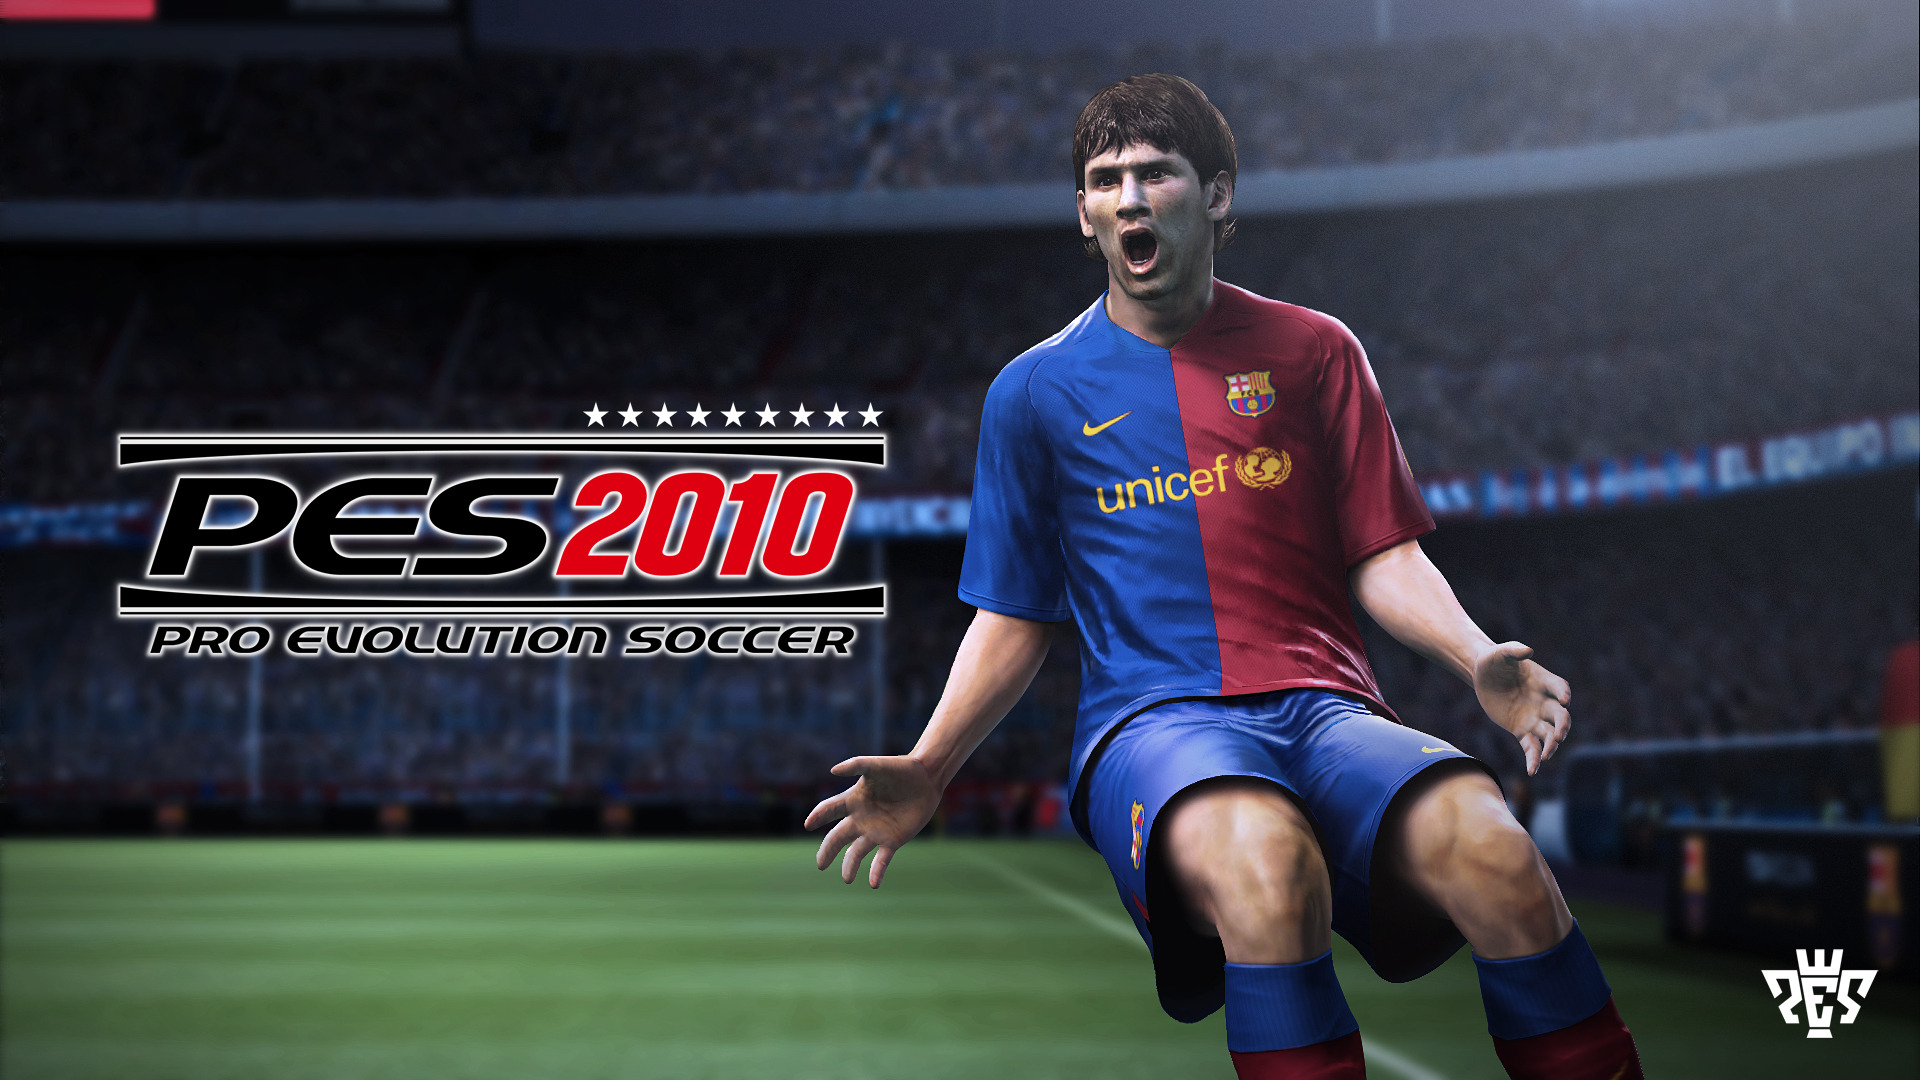 Игра футбол 2010. Pro Evolution Soccer 2010. Pro Evolution Soccer 2009. Про Эволюшн СОККЕР 2009. Пес 2010.